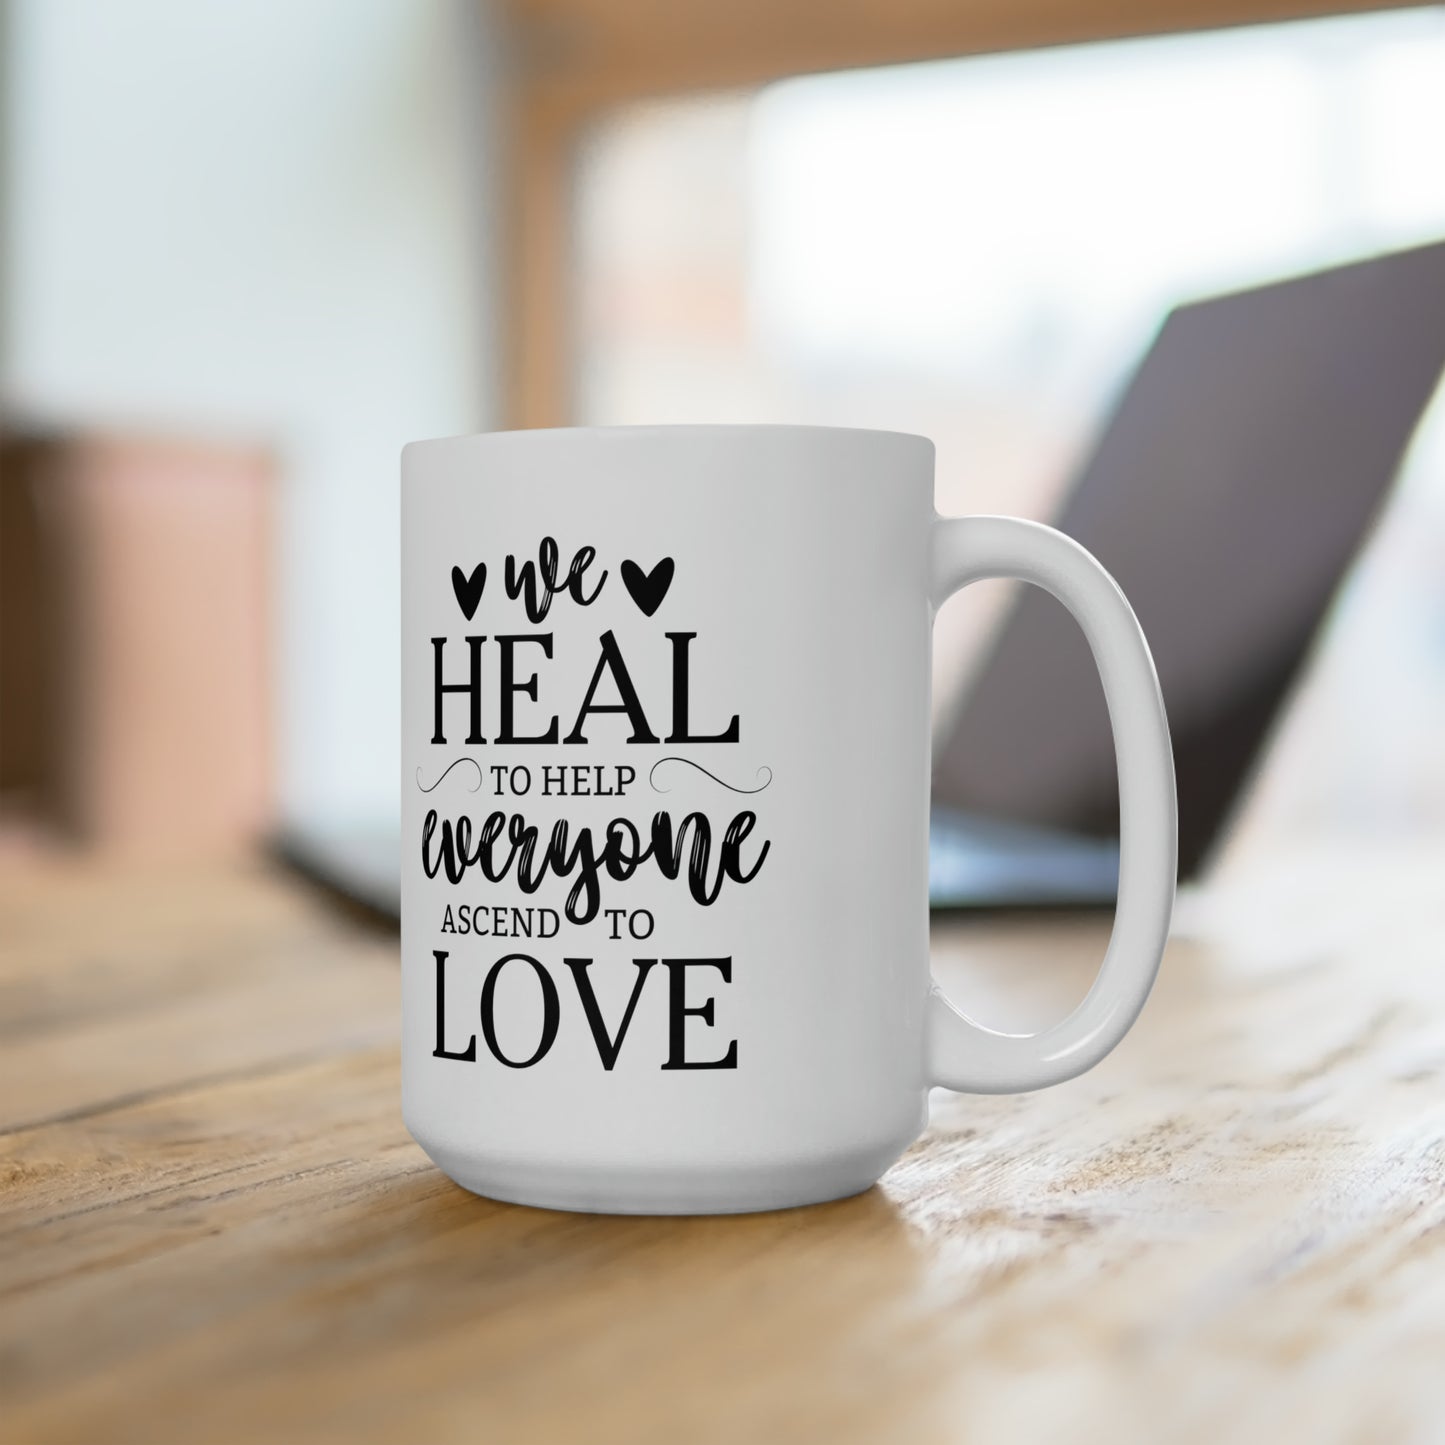 HEAL Helping Everyone Ascend to Love Mug